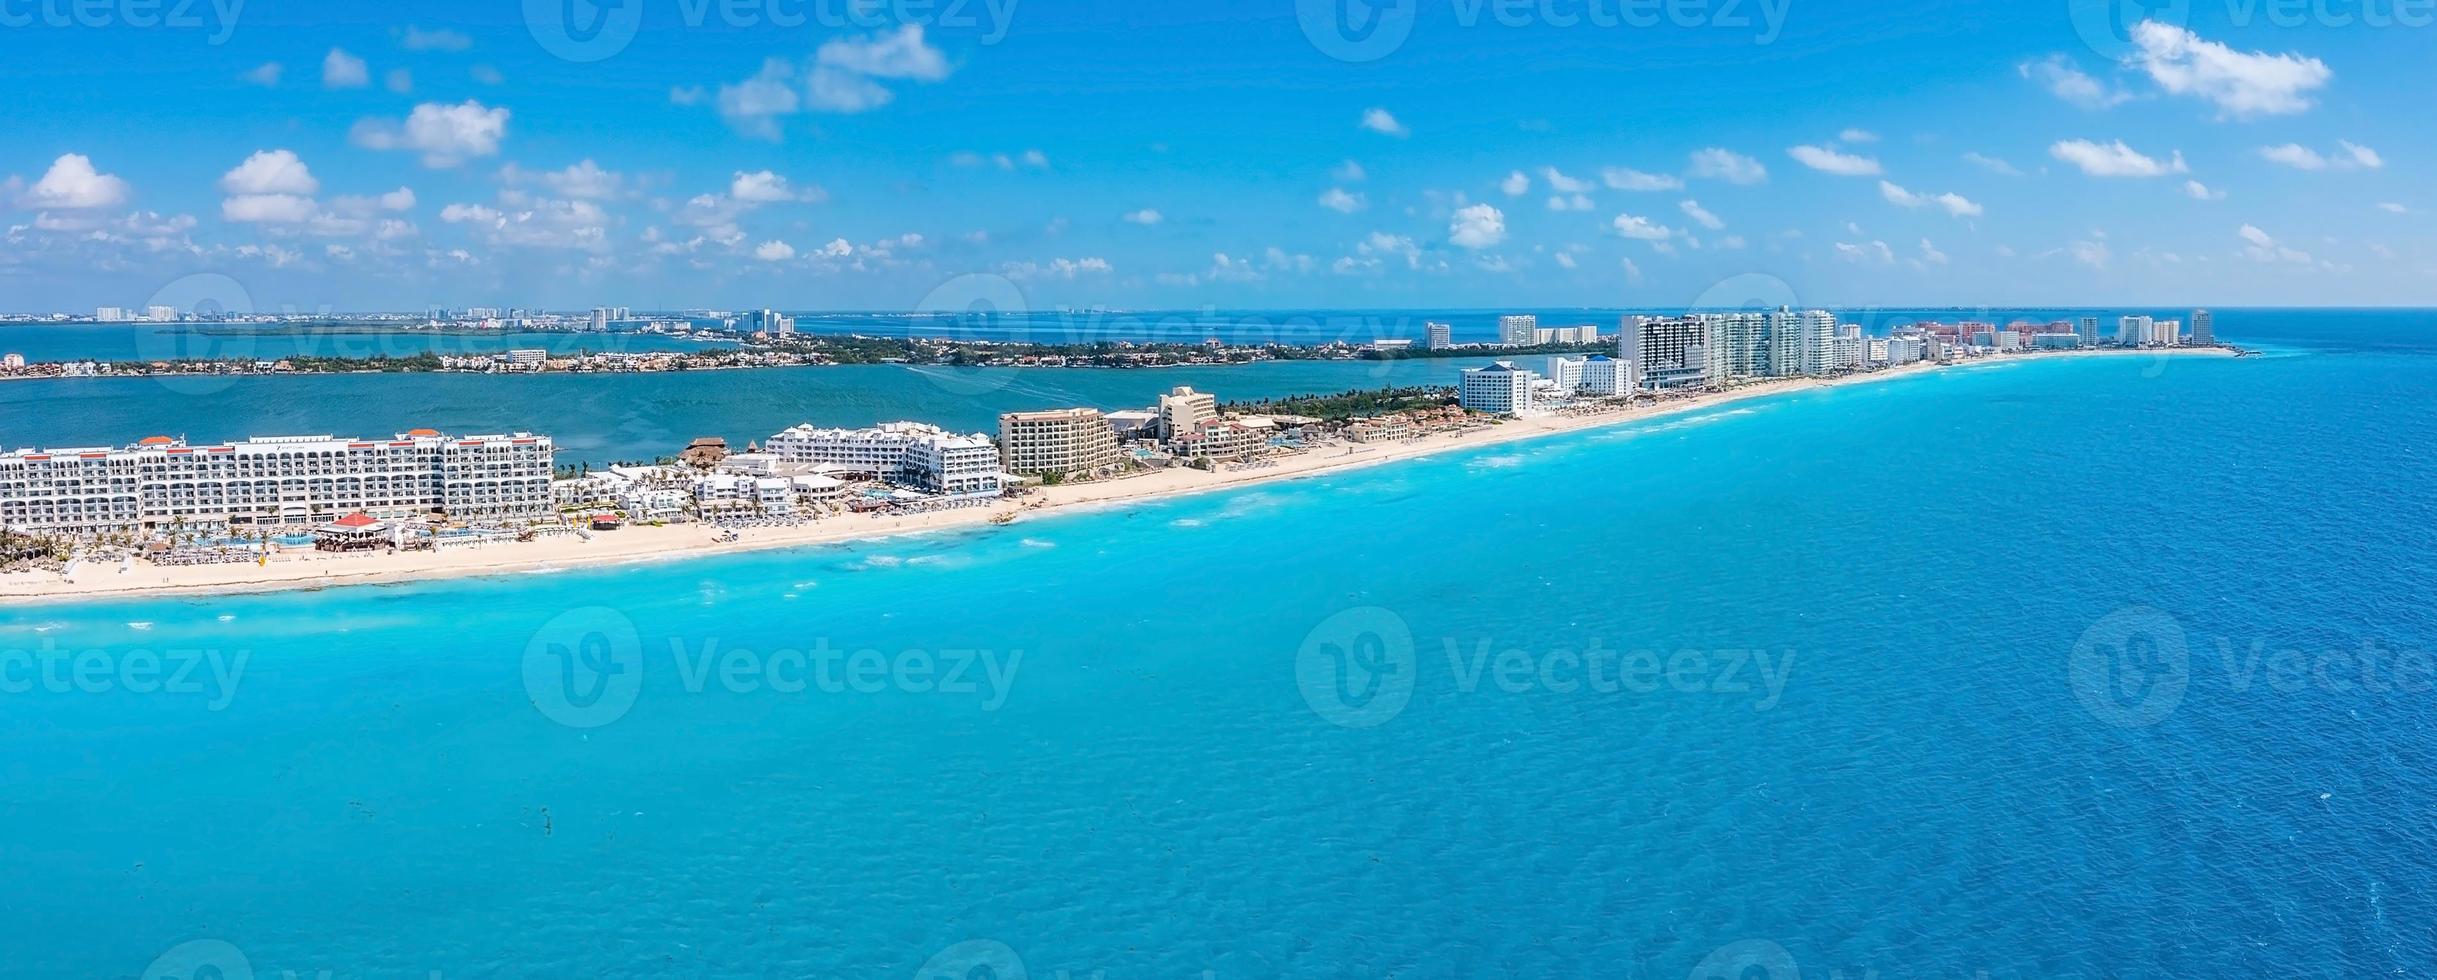 Luftaufnahme von Punta Norte Beach, Cancun, Mexiko. foto